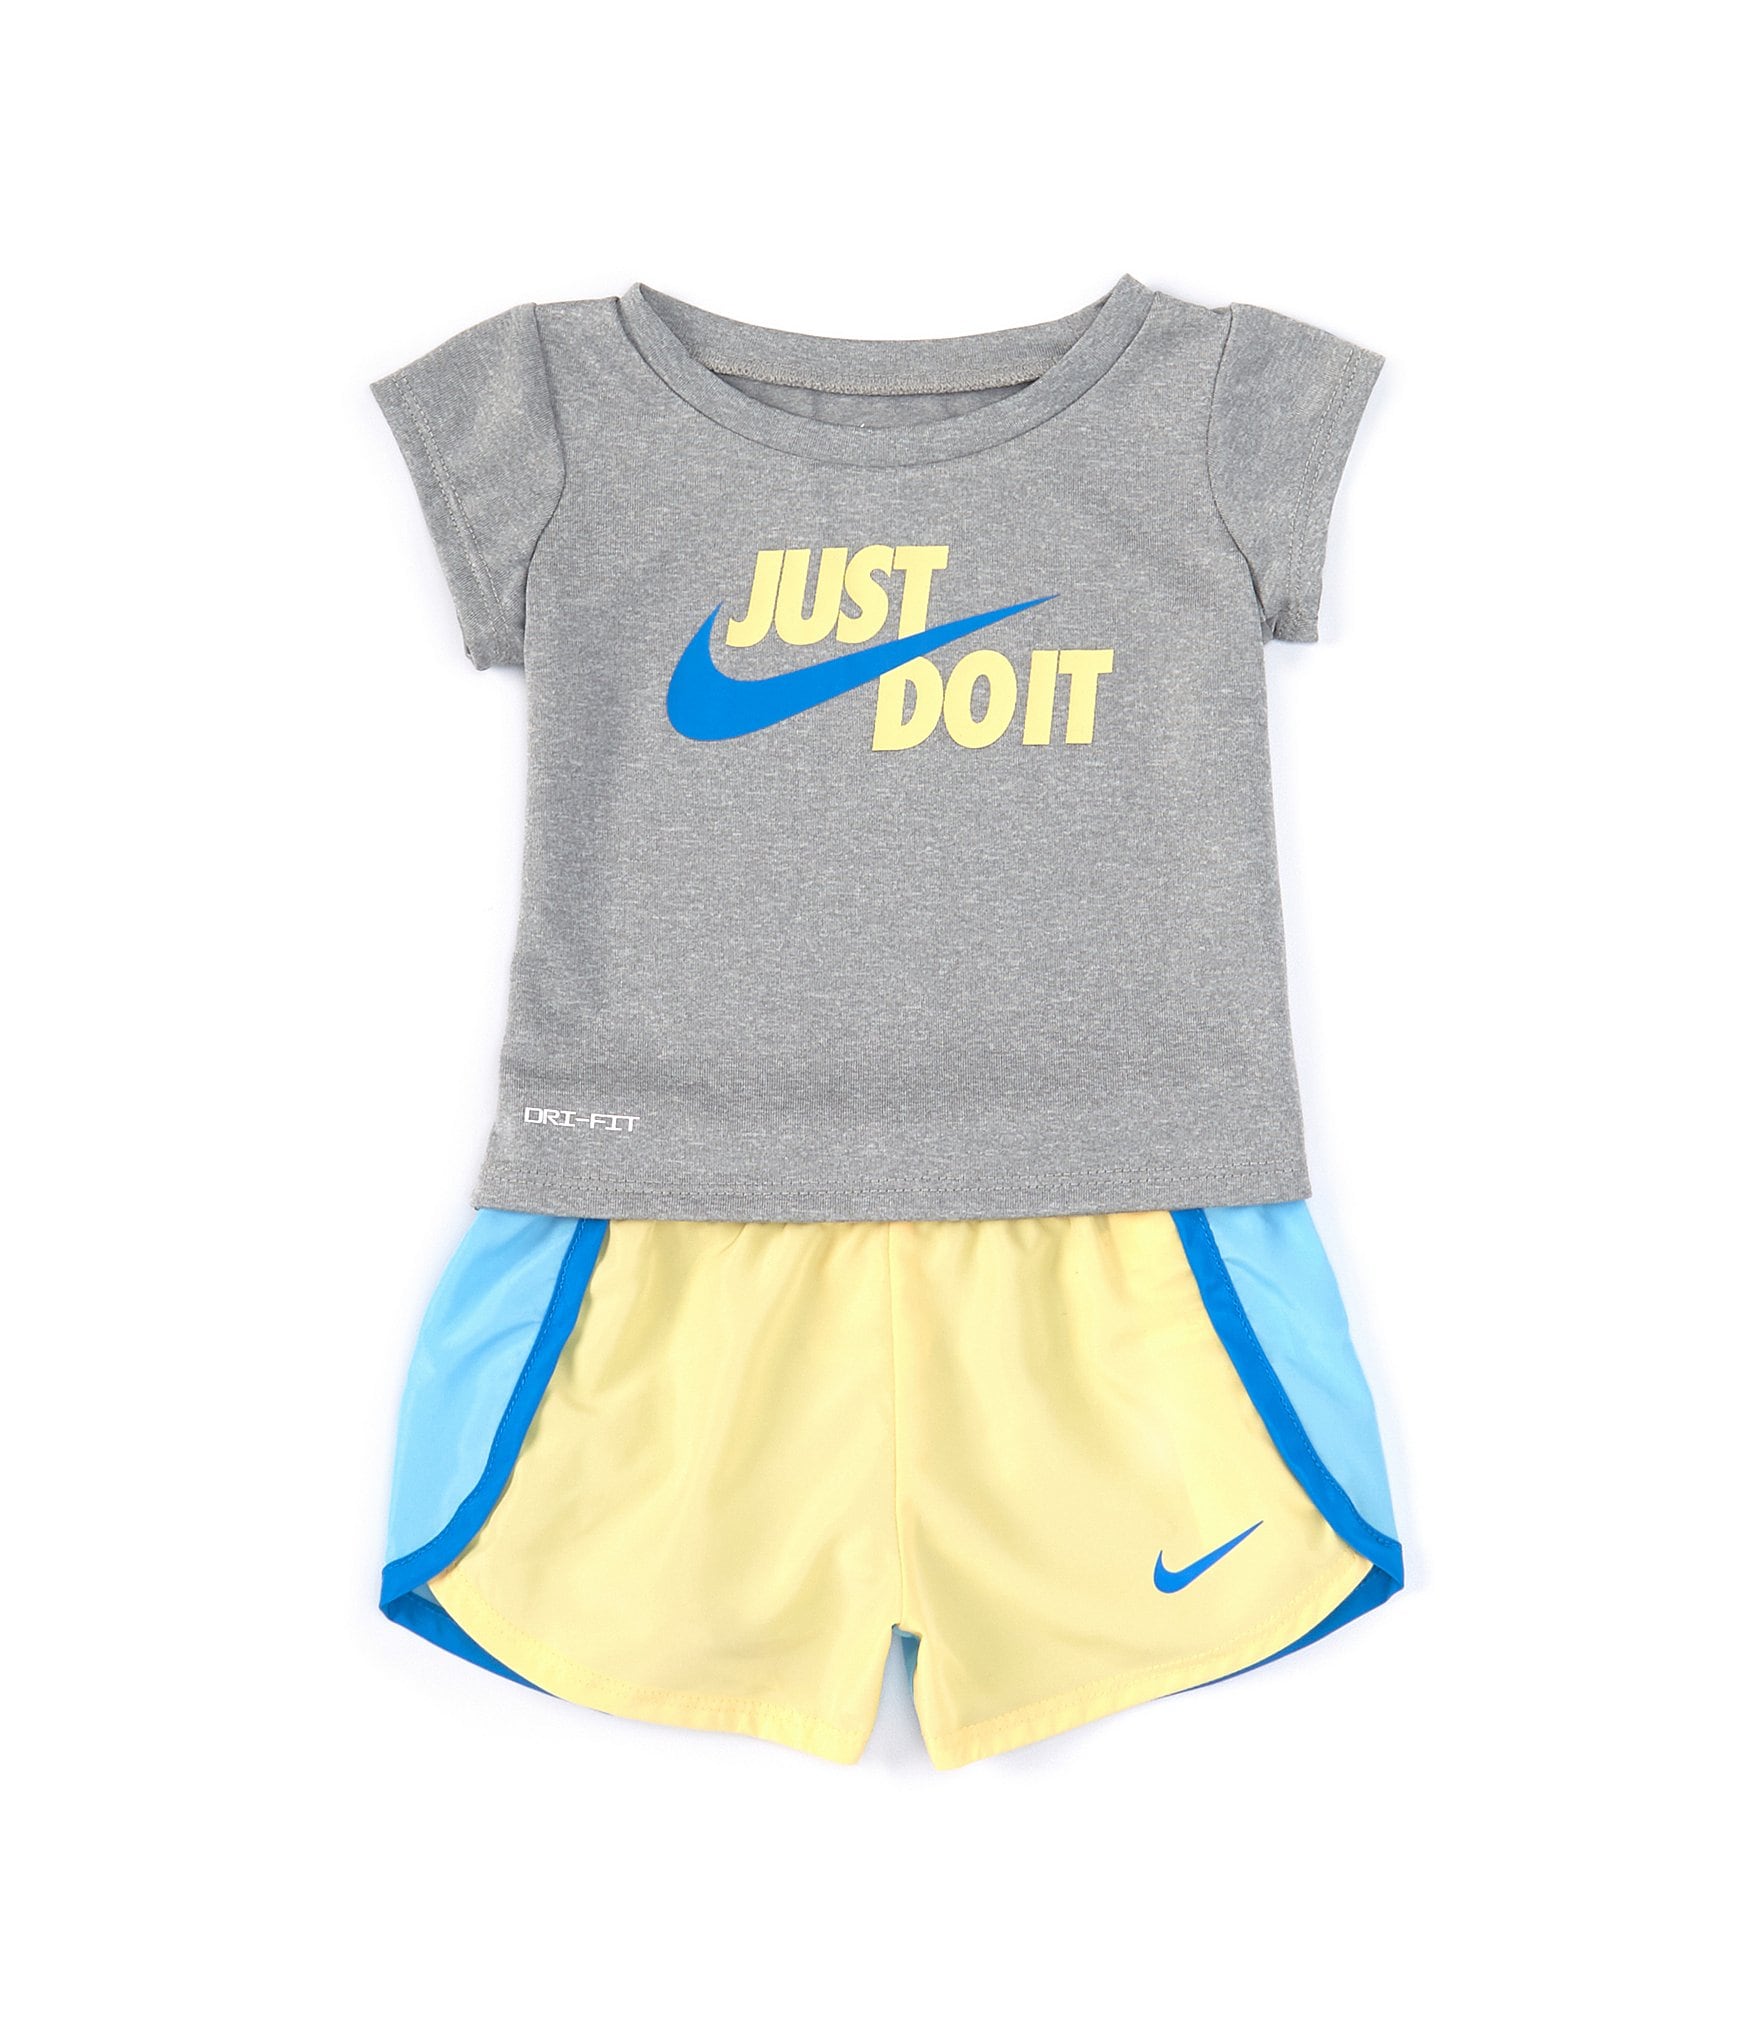 Women's Nike Short Set | Closet Keeps